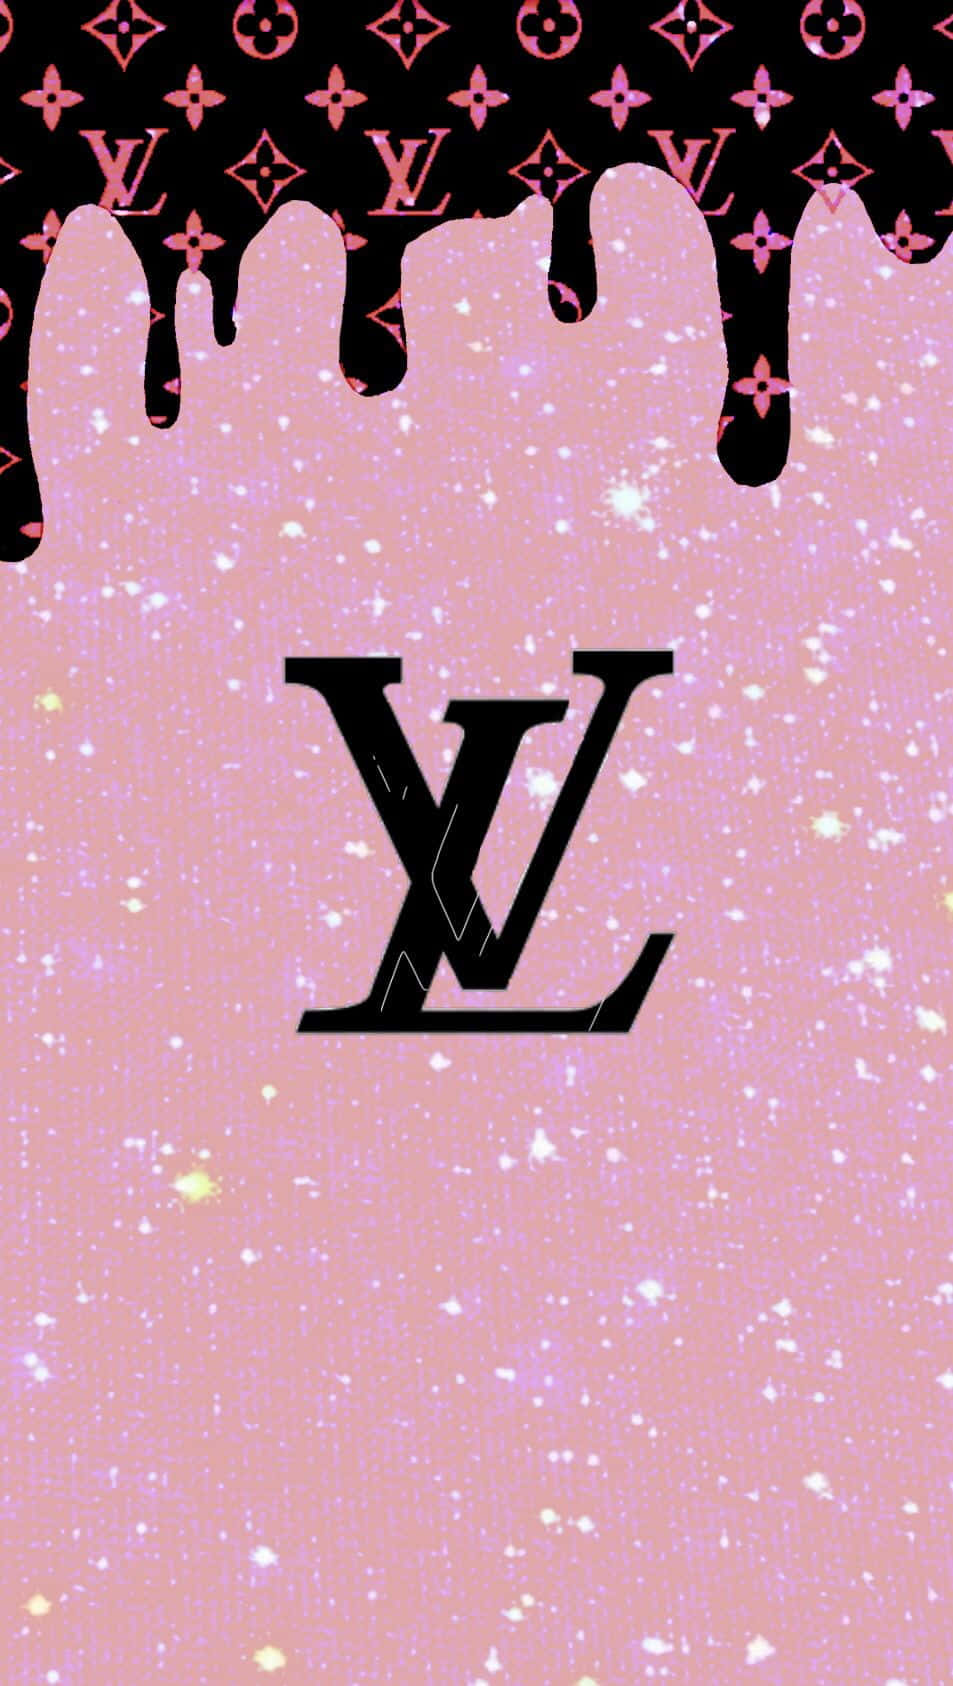 Louis Vuitton Pink Luxury Handbag Wallpaper